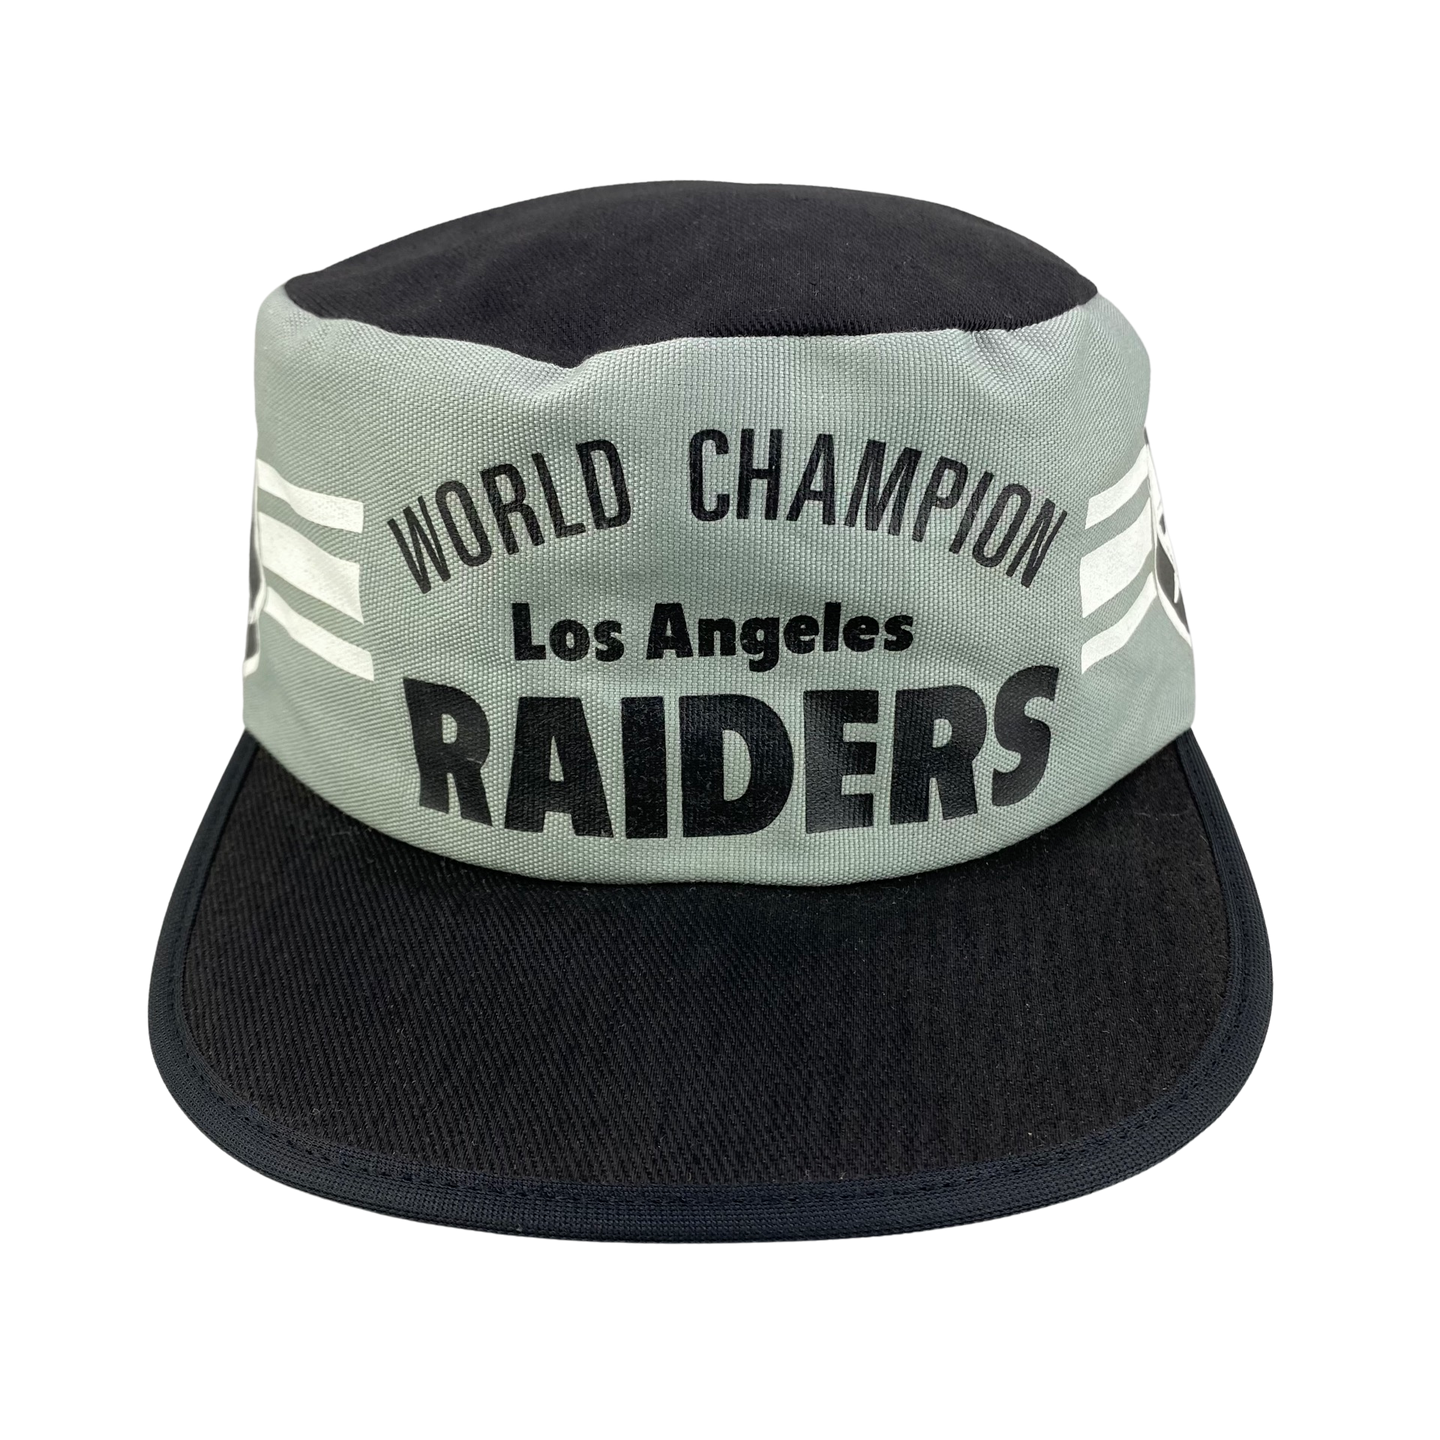 Detailed view of Los Angeles Raiders snapback baseball cap. Photo